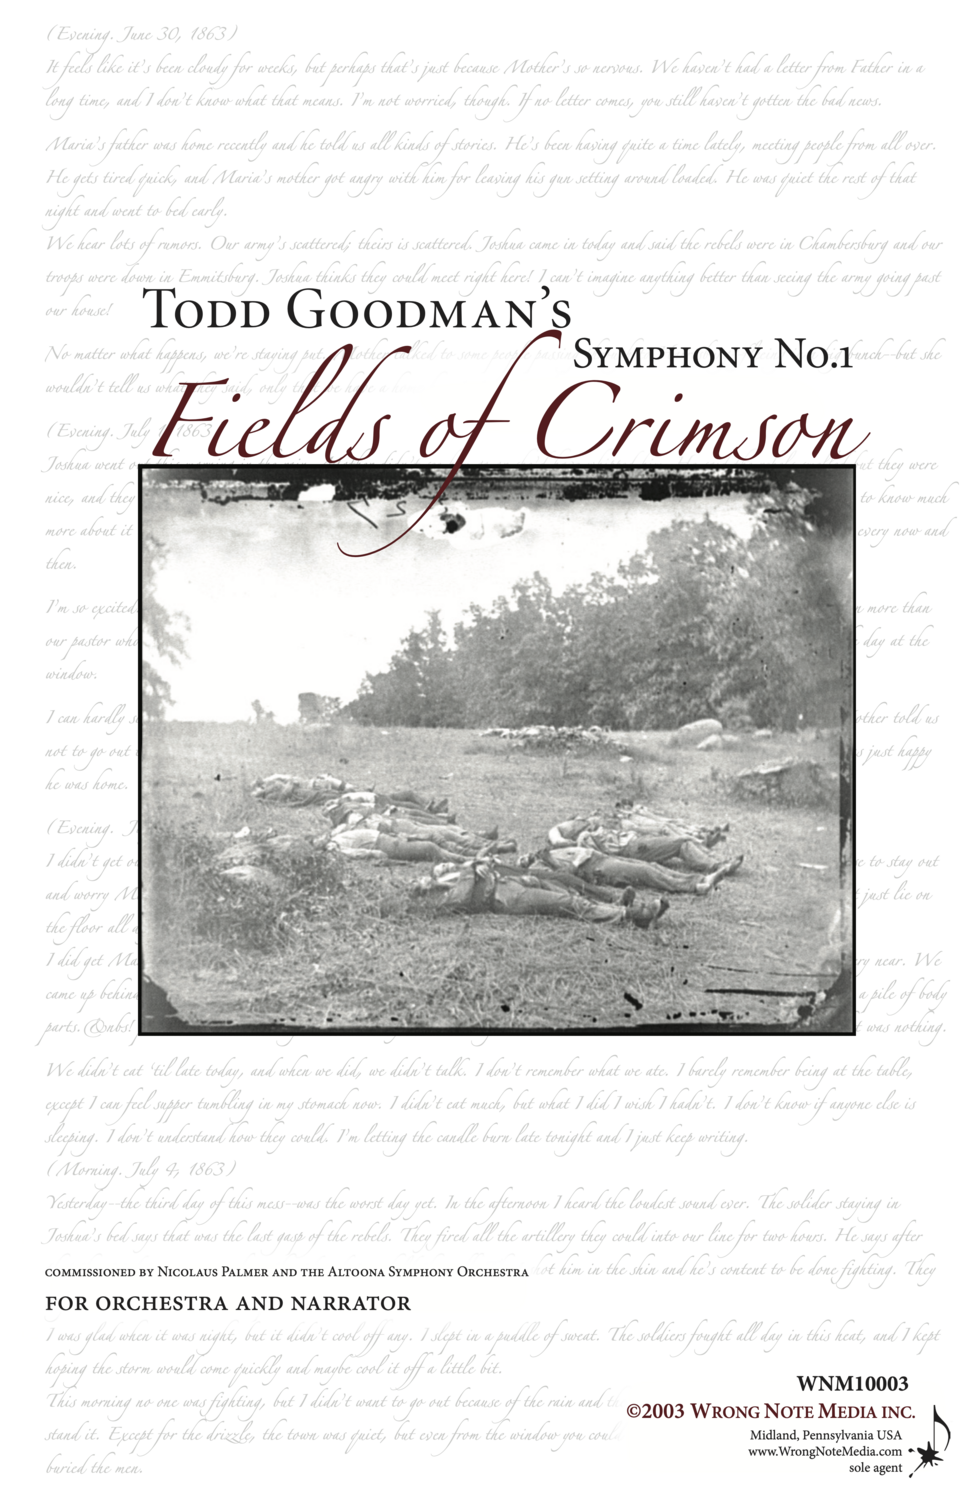 Symphony No. 1 "Fields of Crimson" - orchestra SCORE, by Todd Goodman